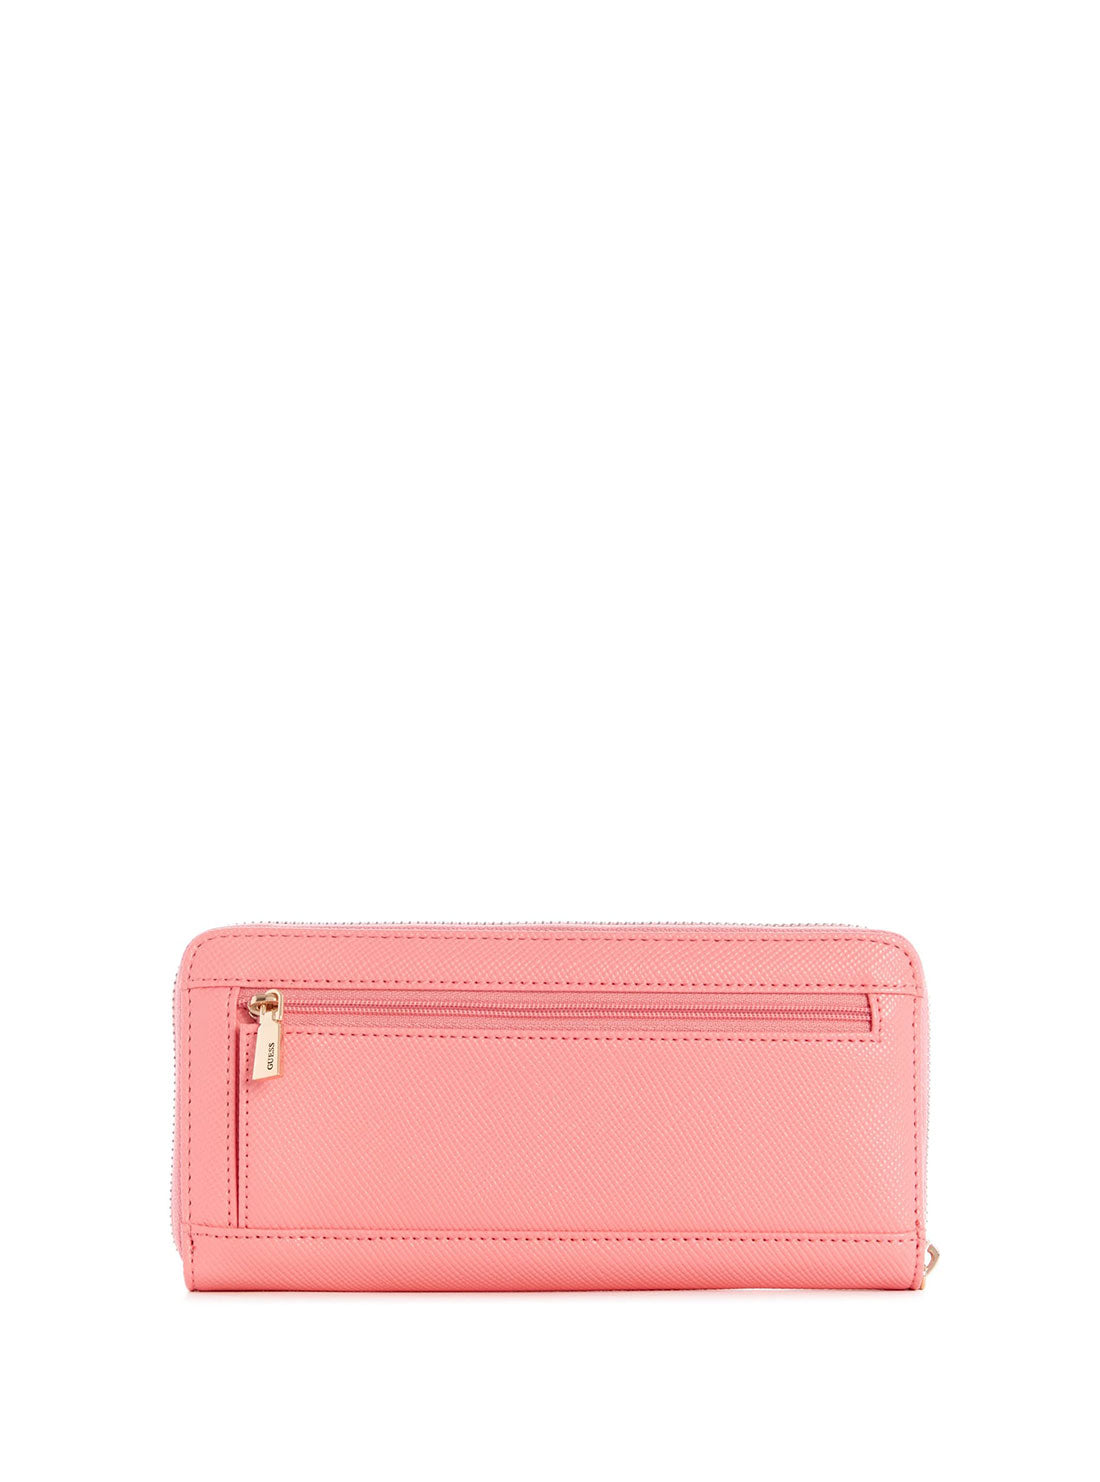 GUESS Women's Pink Laurel Large Wallet ZG850046 Back View